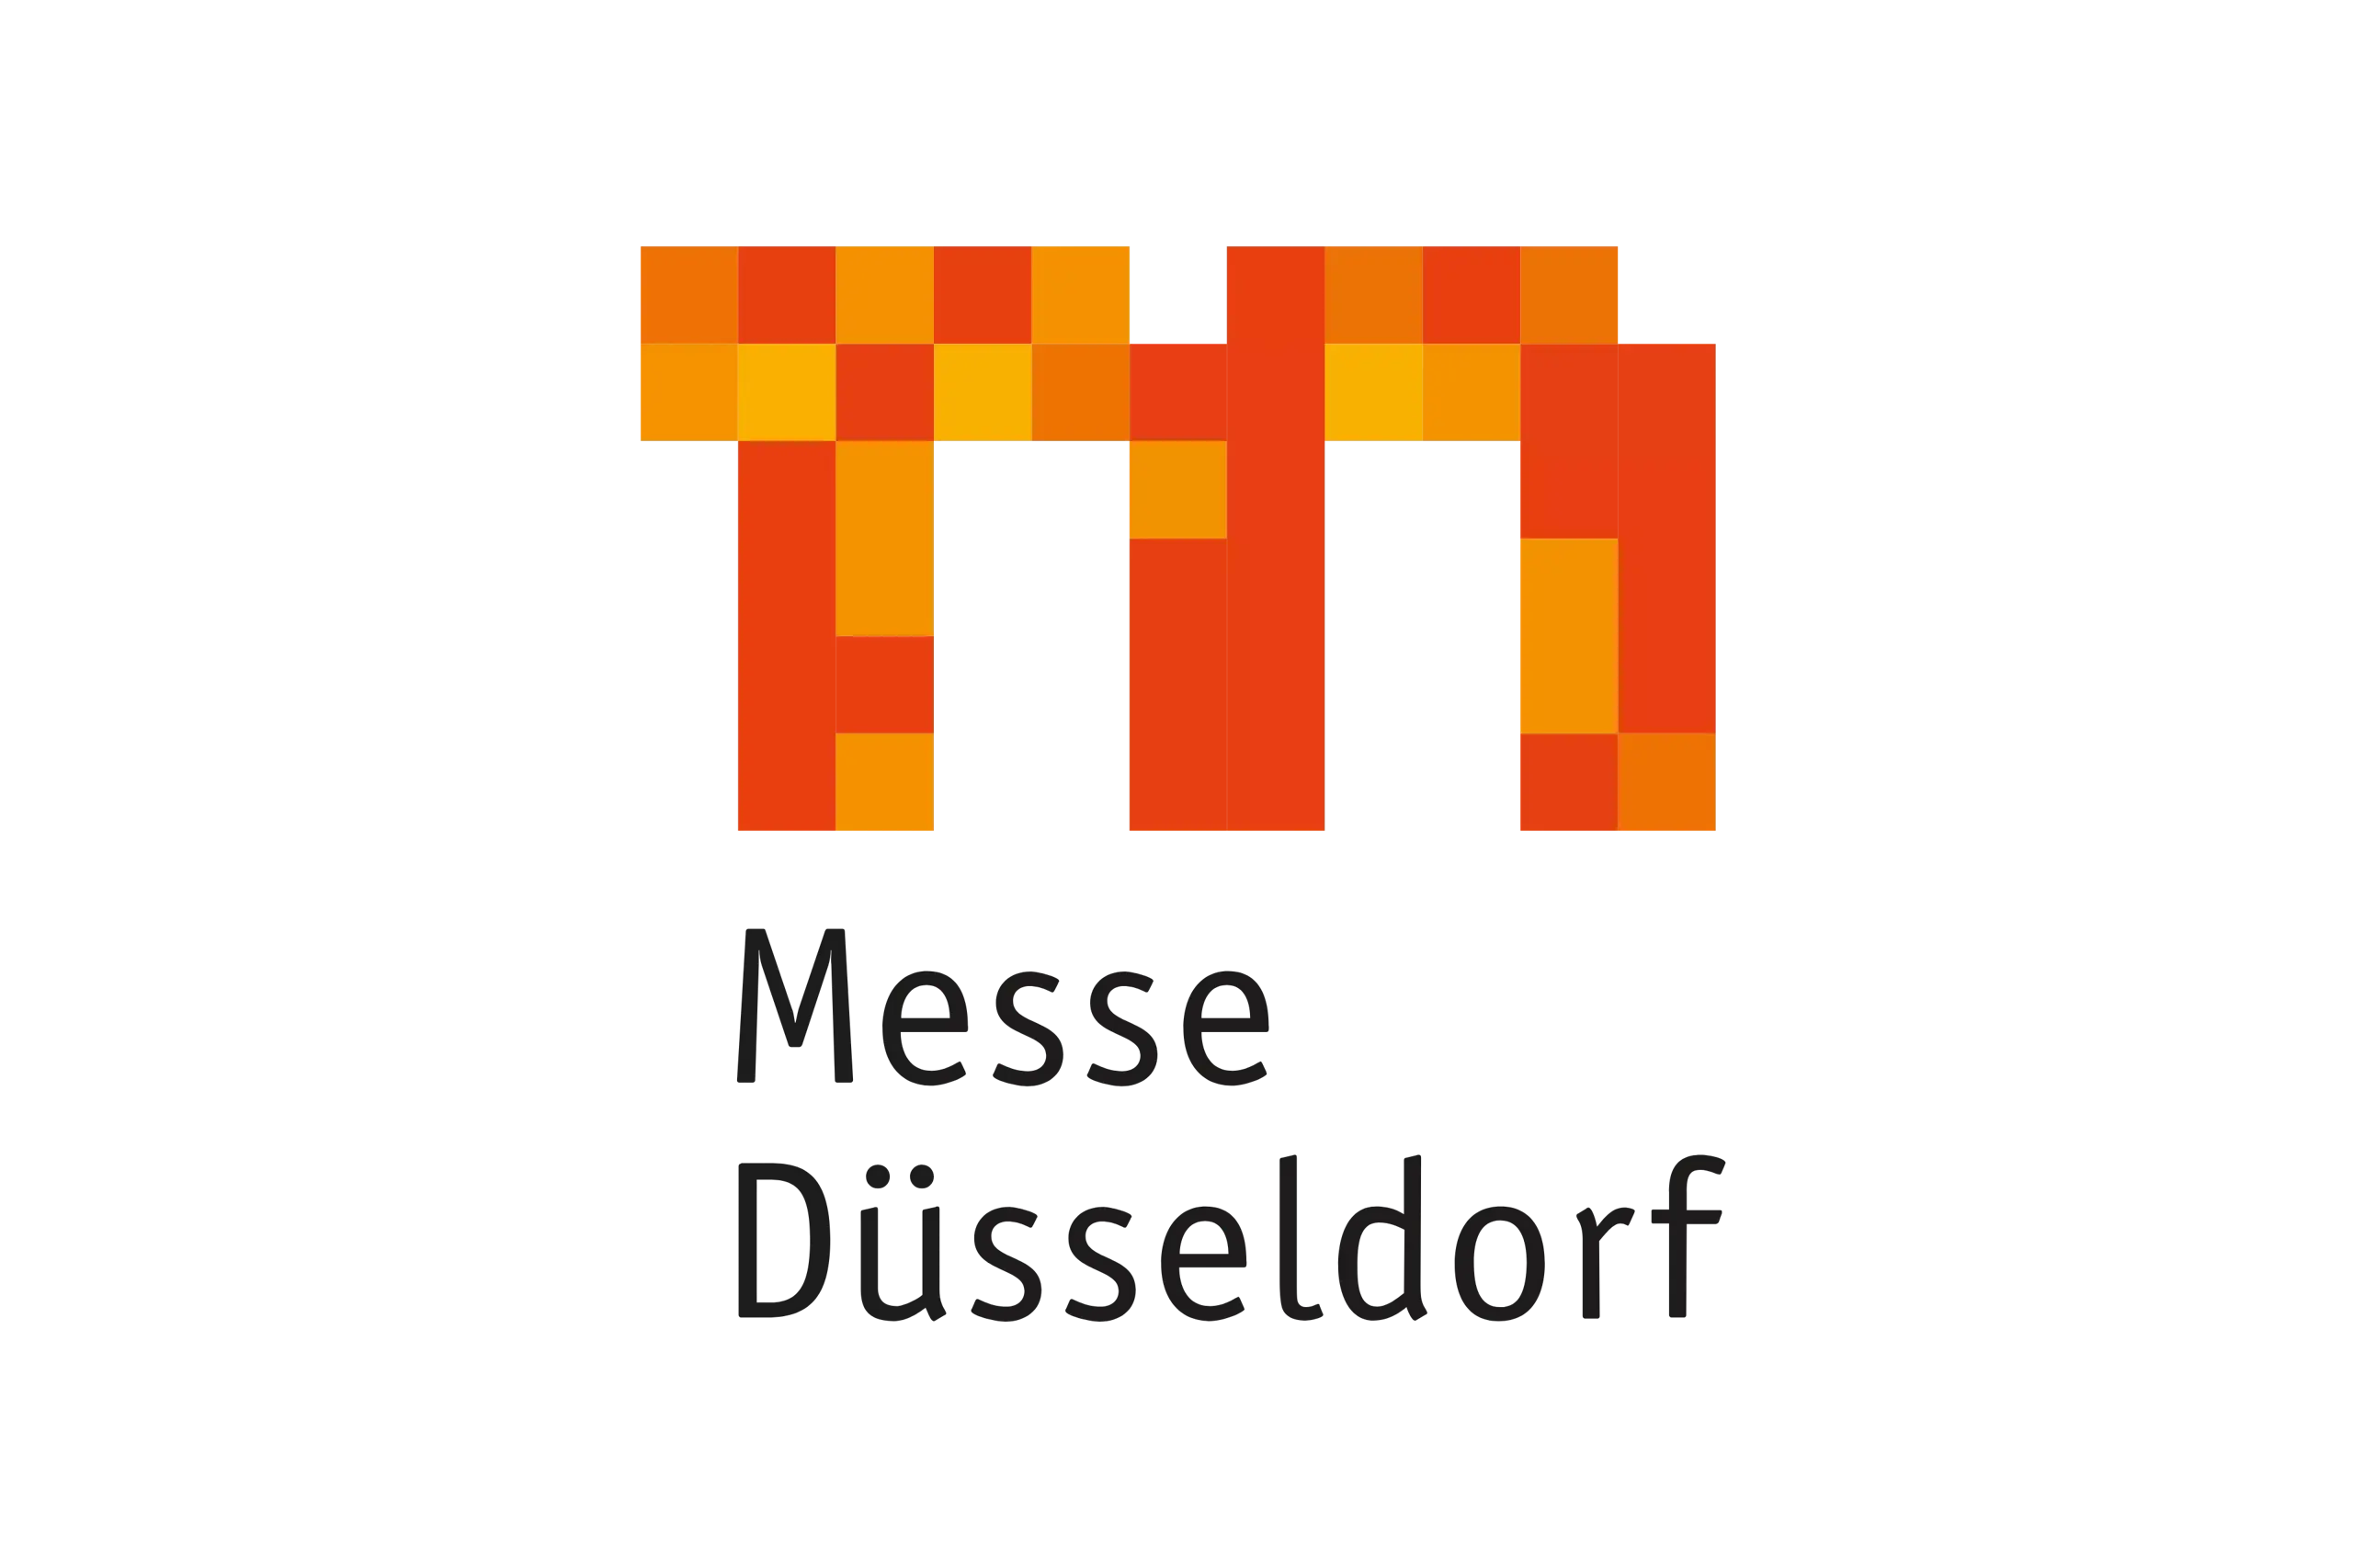 Messe dusseldorf logo